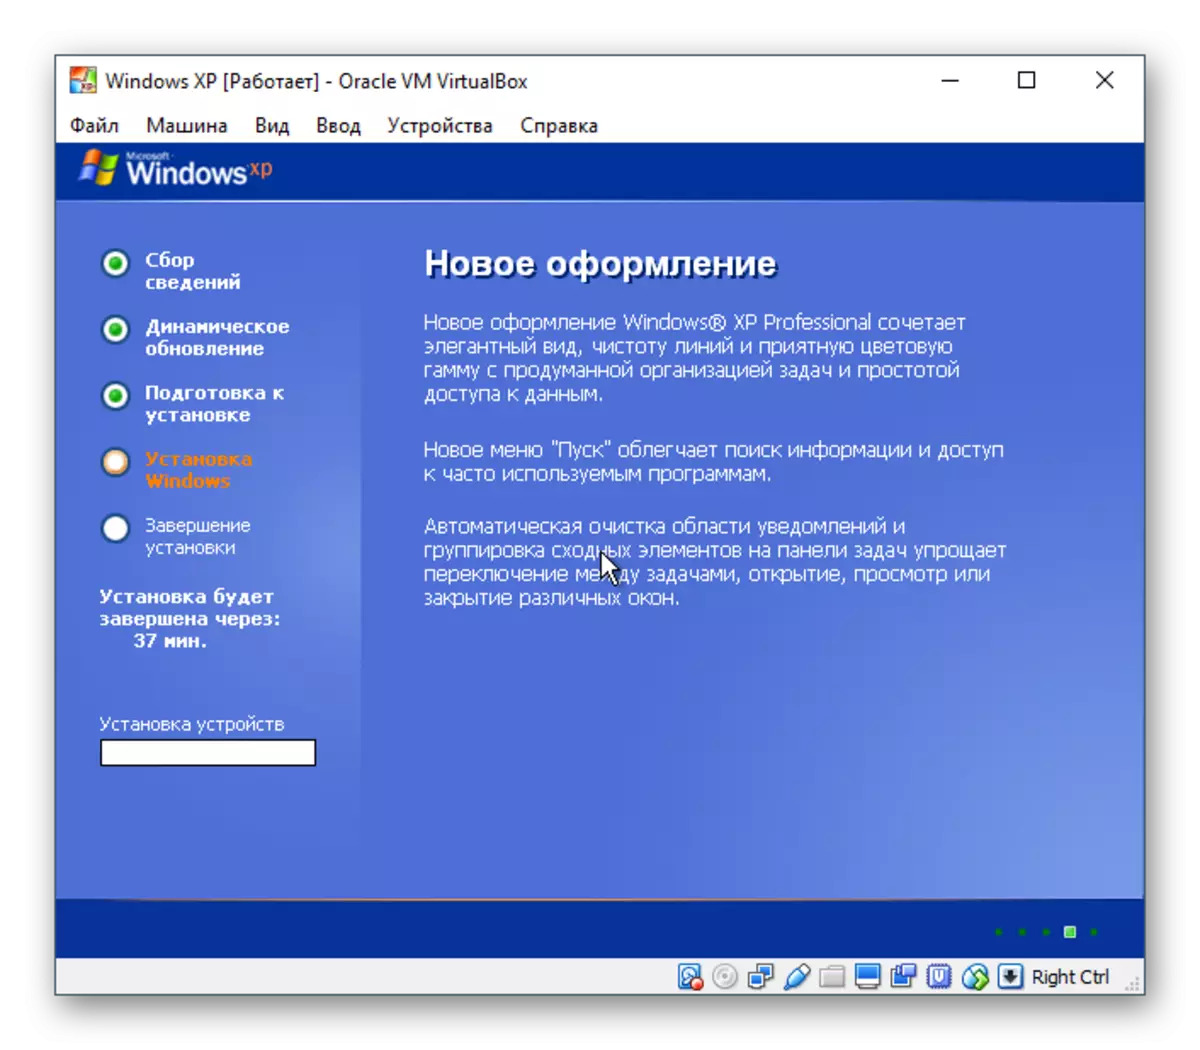 New Decoration Installer Windows XP in VirtualBox